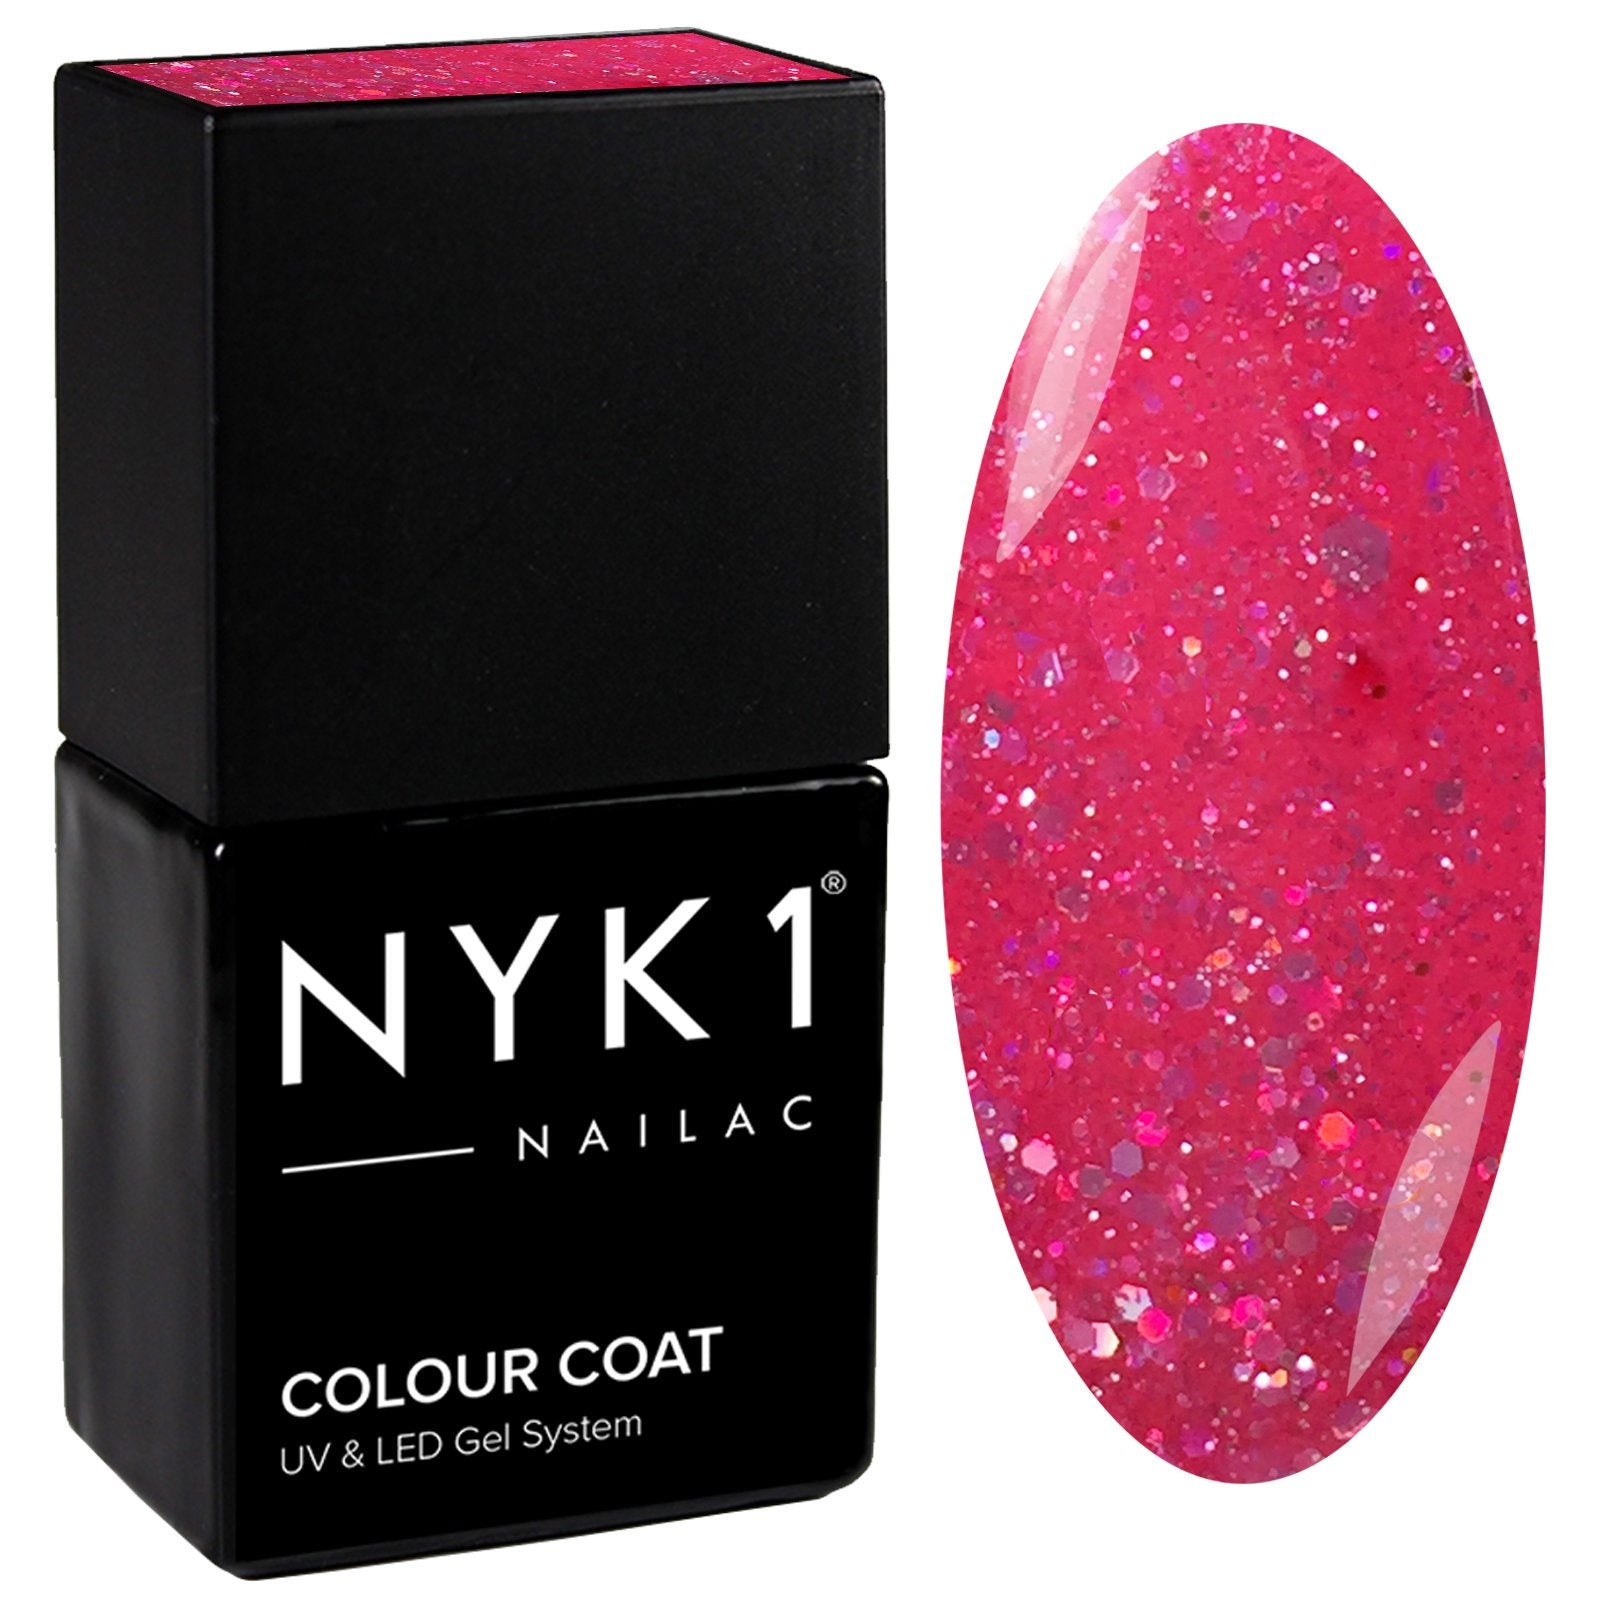 NYK1 Diamond Candy Pink Glitter Sparkle Gel Nail Polish